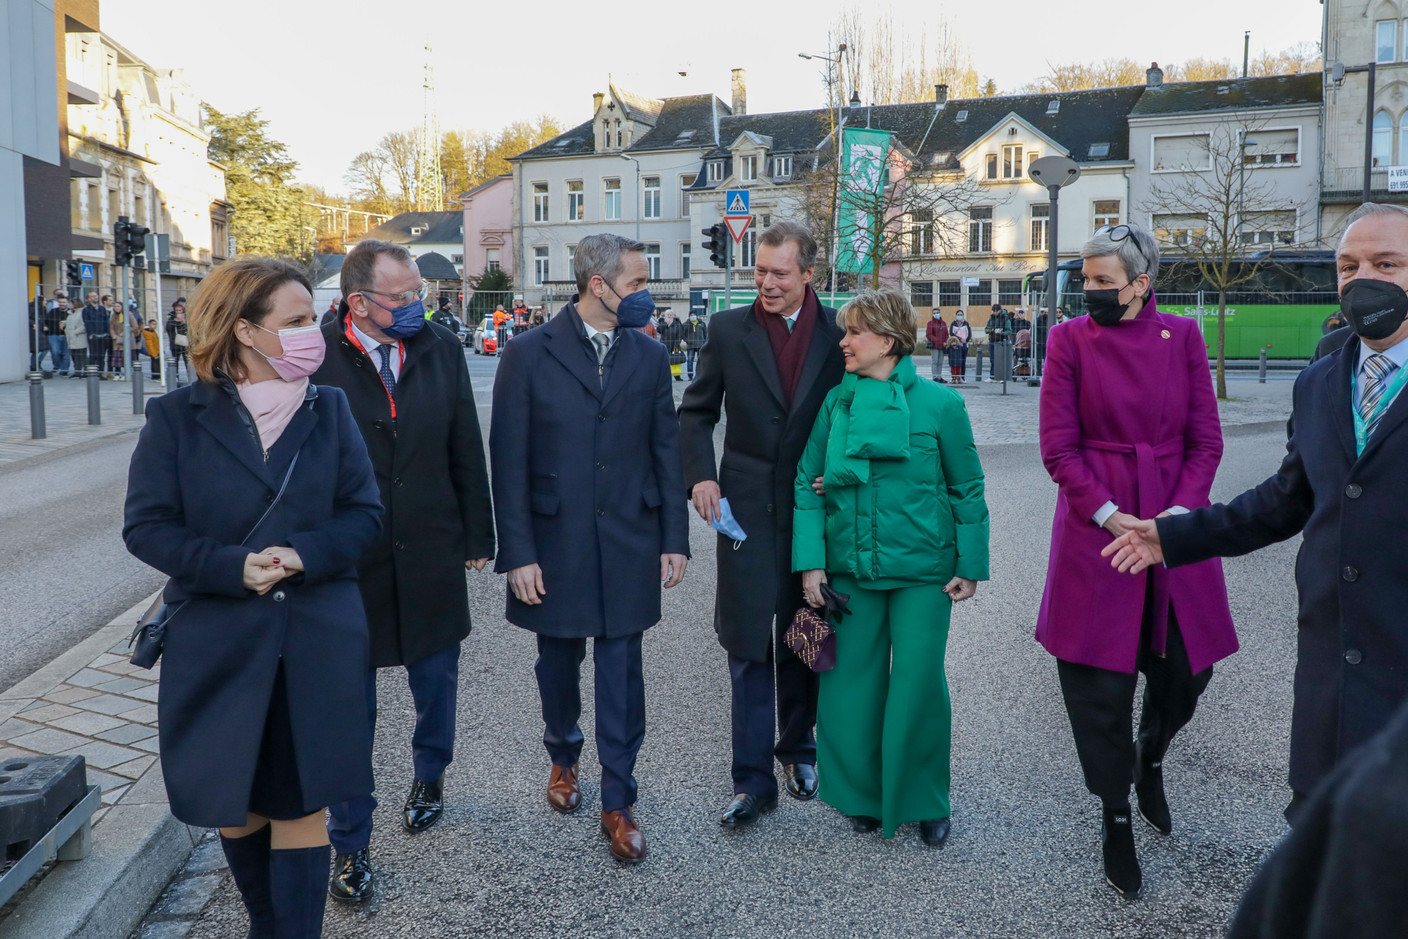 Grand Duke Henri and Grand Duchess Maria Teresa were present for the opening evening. (Photo: Luc Deflorenne)